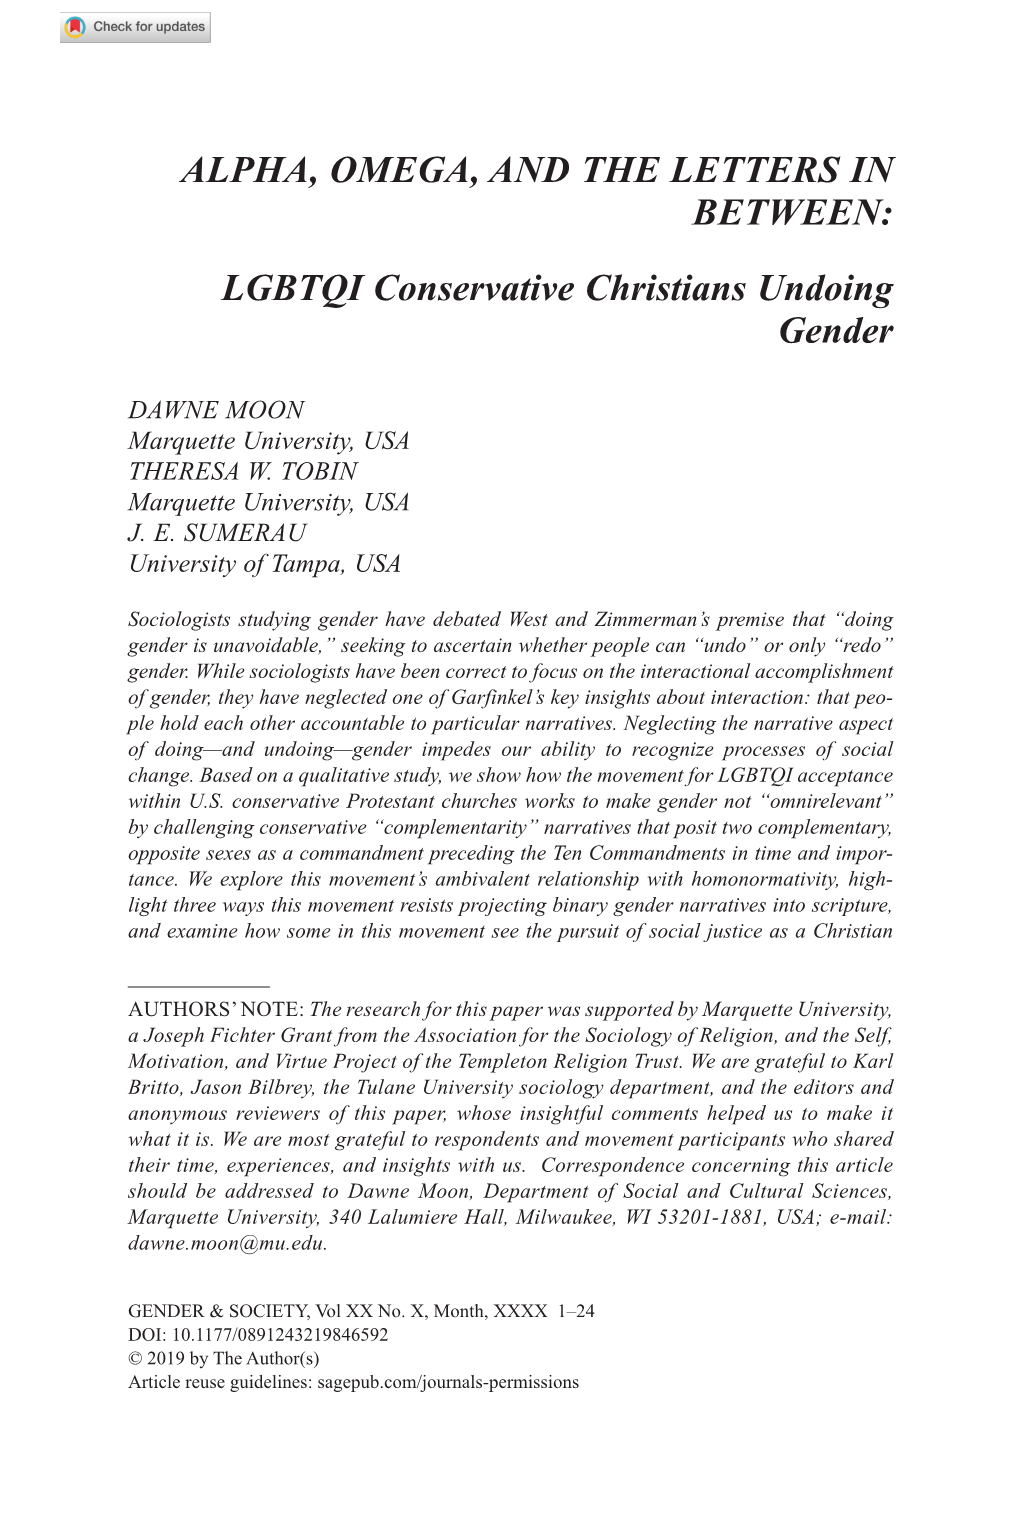 LGBTQI Conservative Christians Undoing Gender